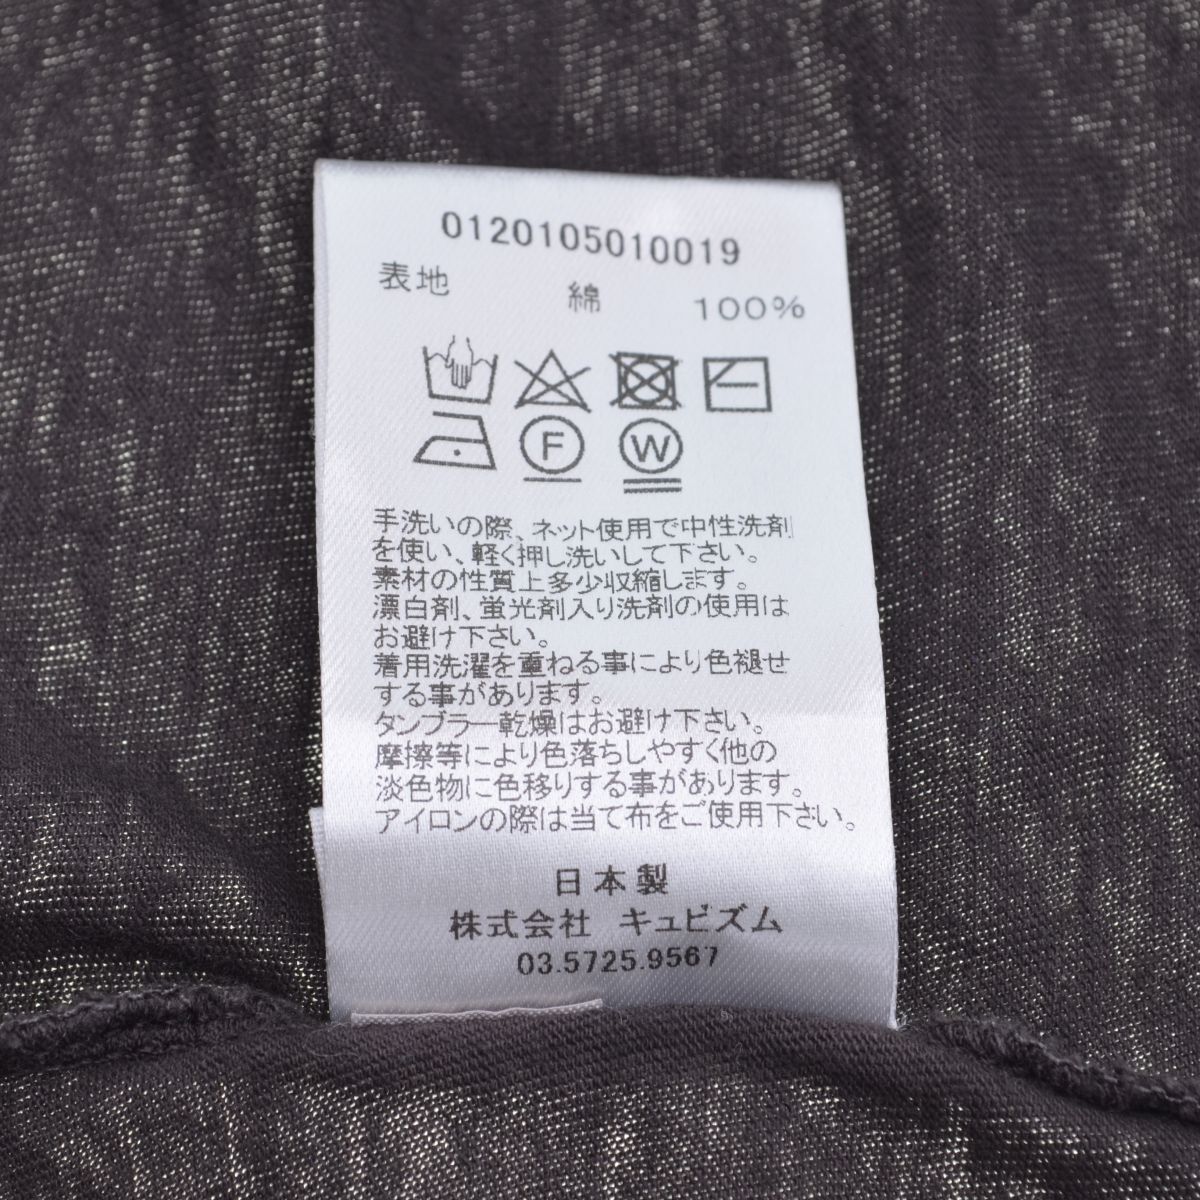 VISVIM / ビズビム 20SS 0120105010019 AMPLUS TEE S/S CRASH クラッシュダメージ加工 半袖Tシャツ  -ブランド古着の買取販売カンフル